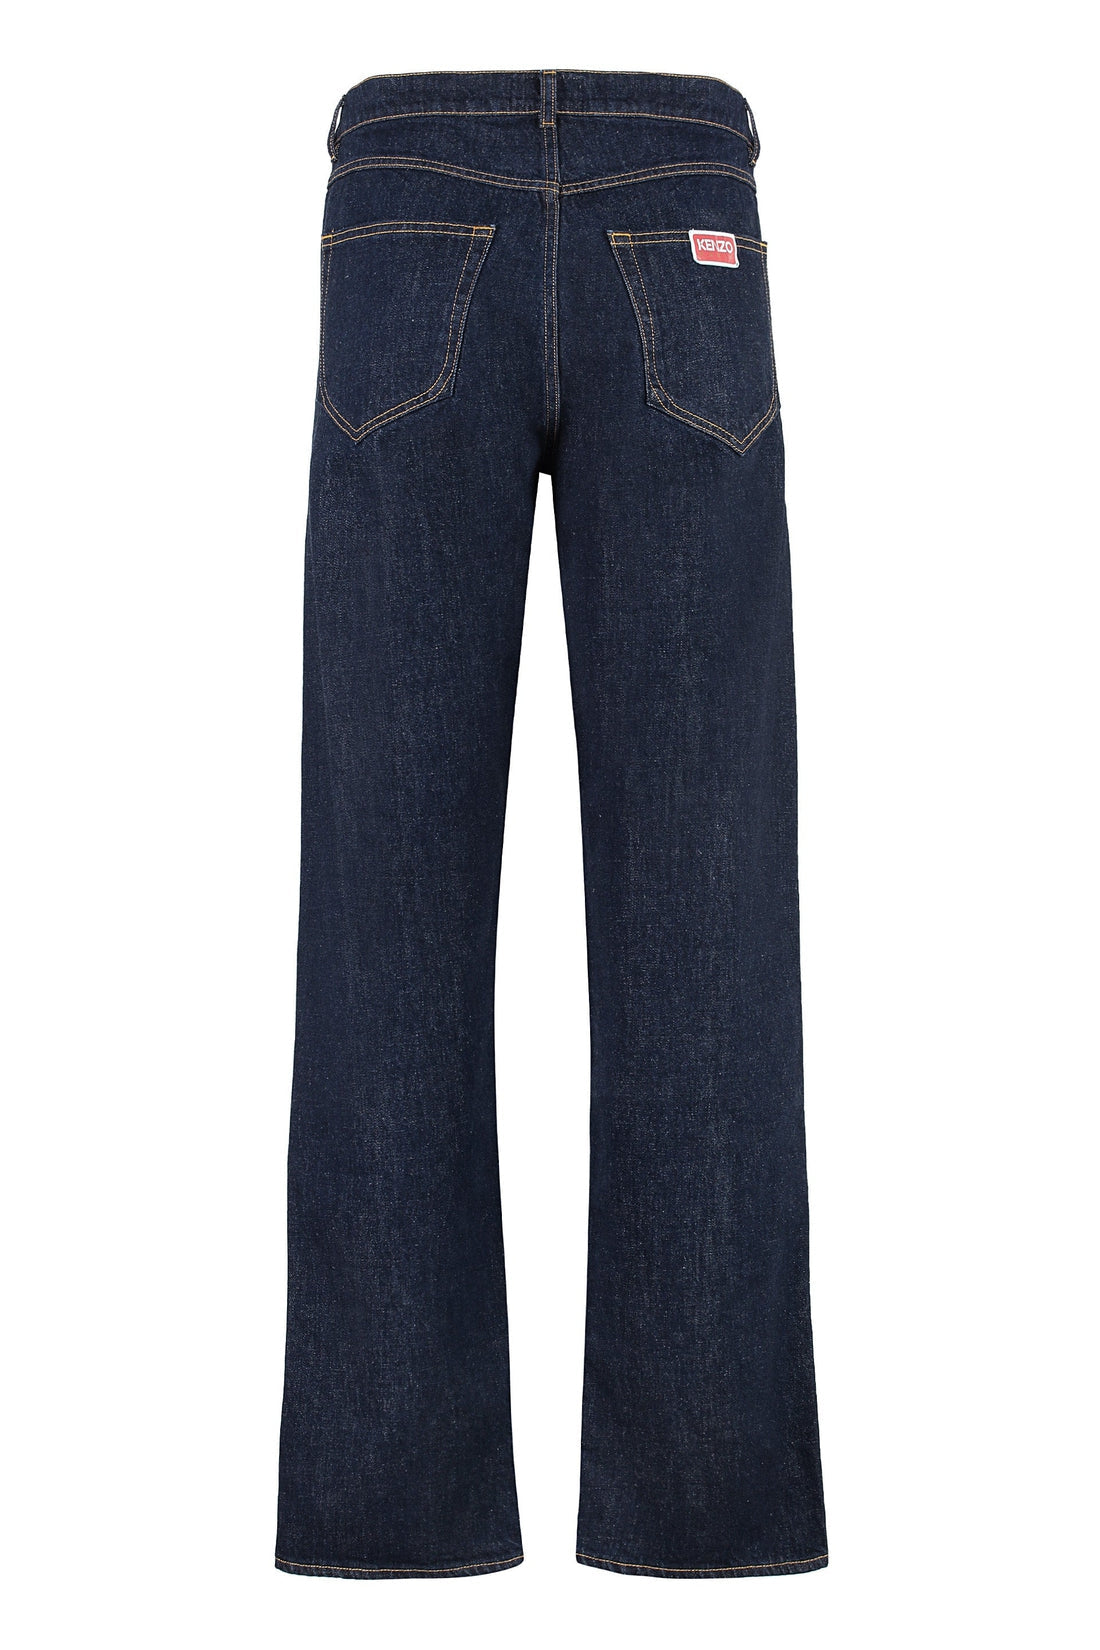 Kenzo-OUTLET-SALE-ASAGAO 5-pocket straight-leg jeans-ARCHIVIST